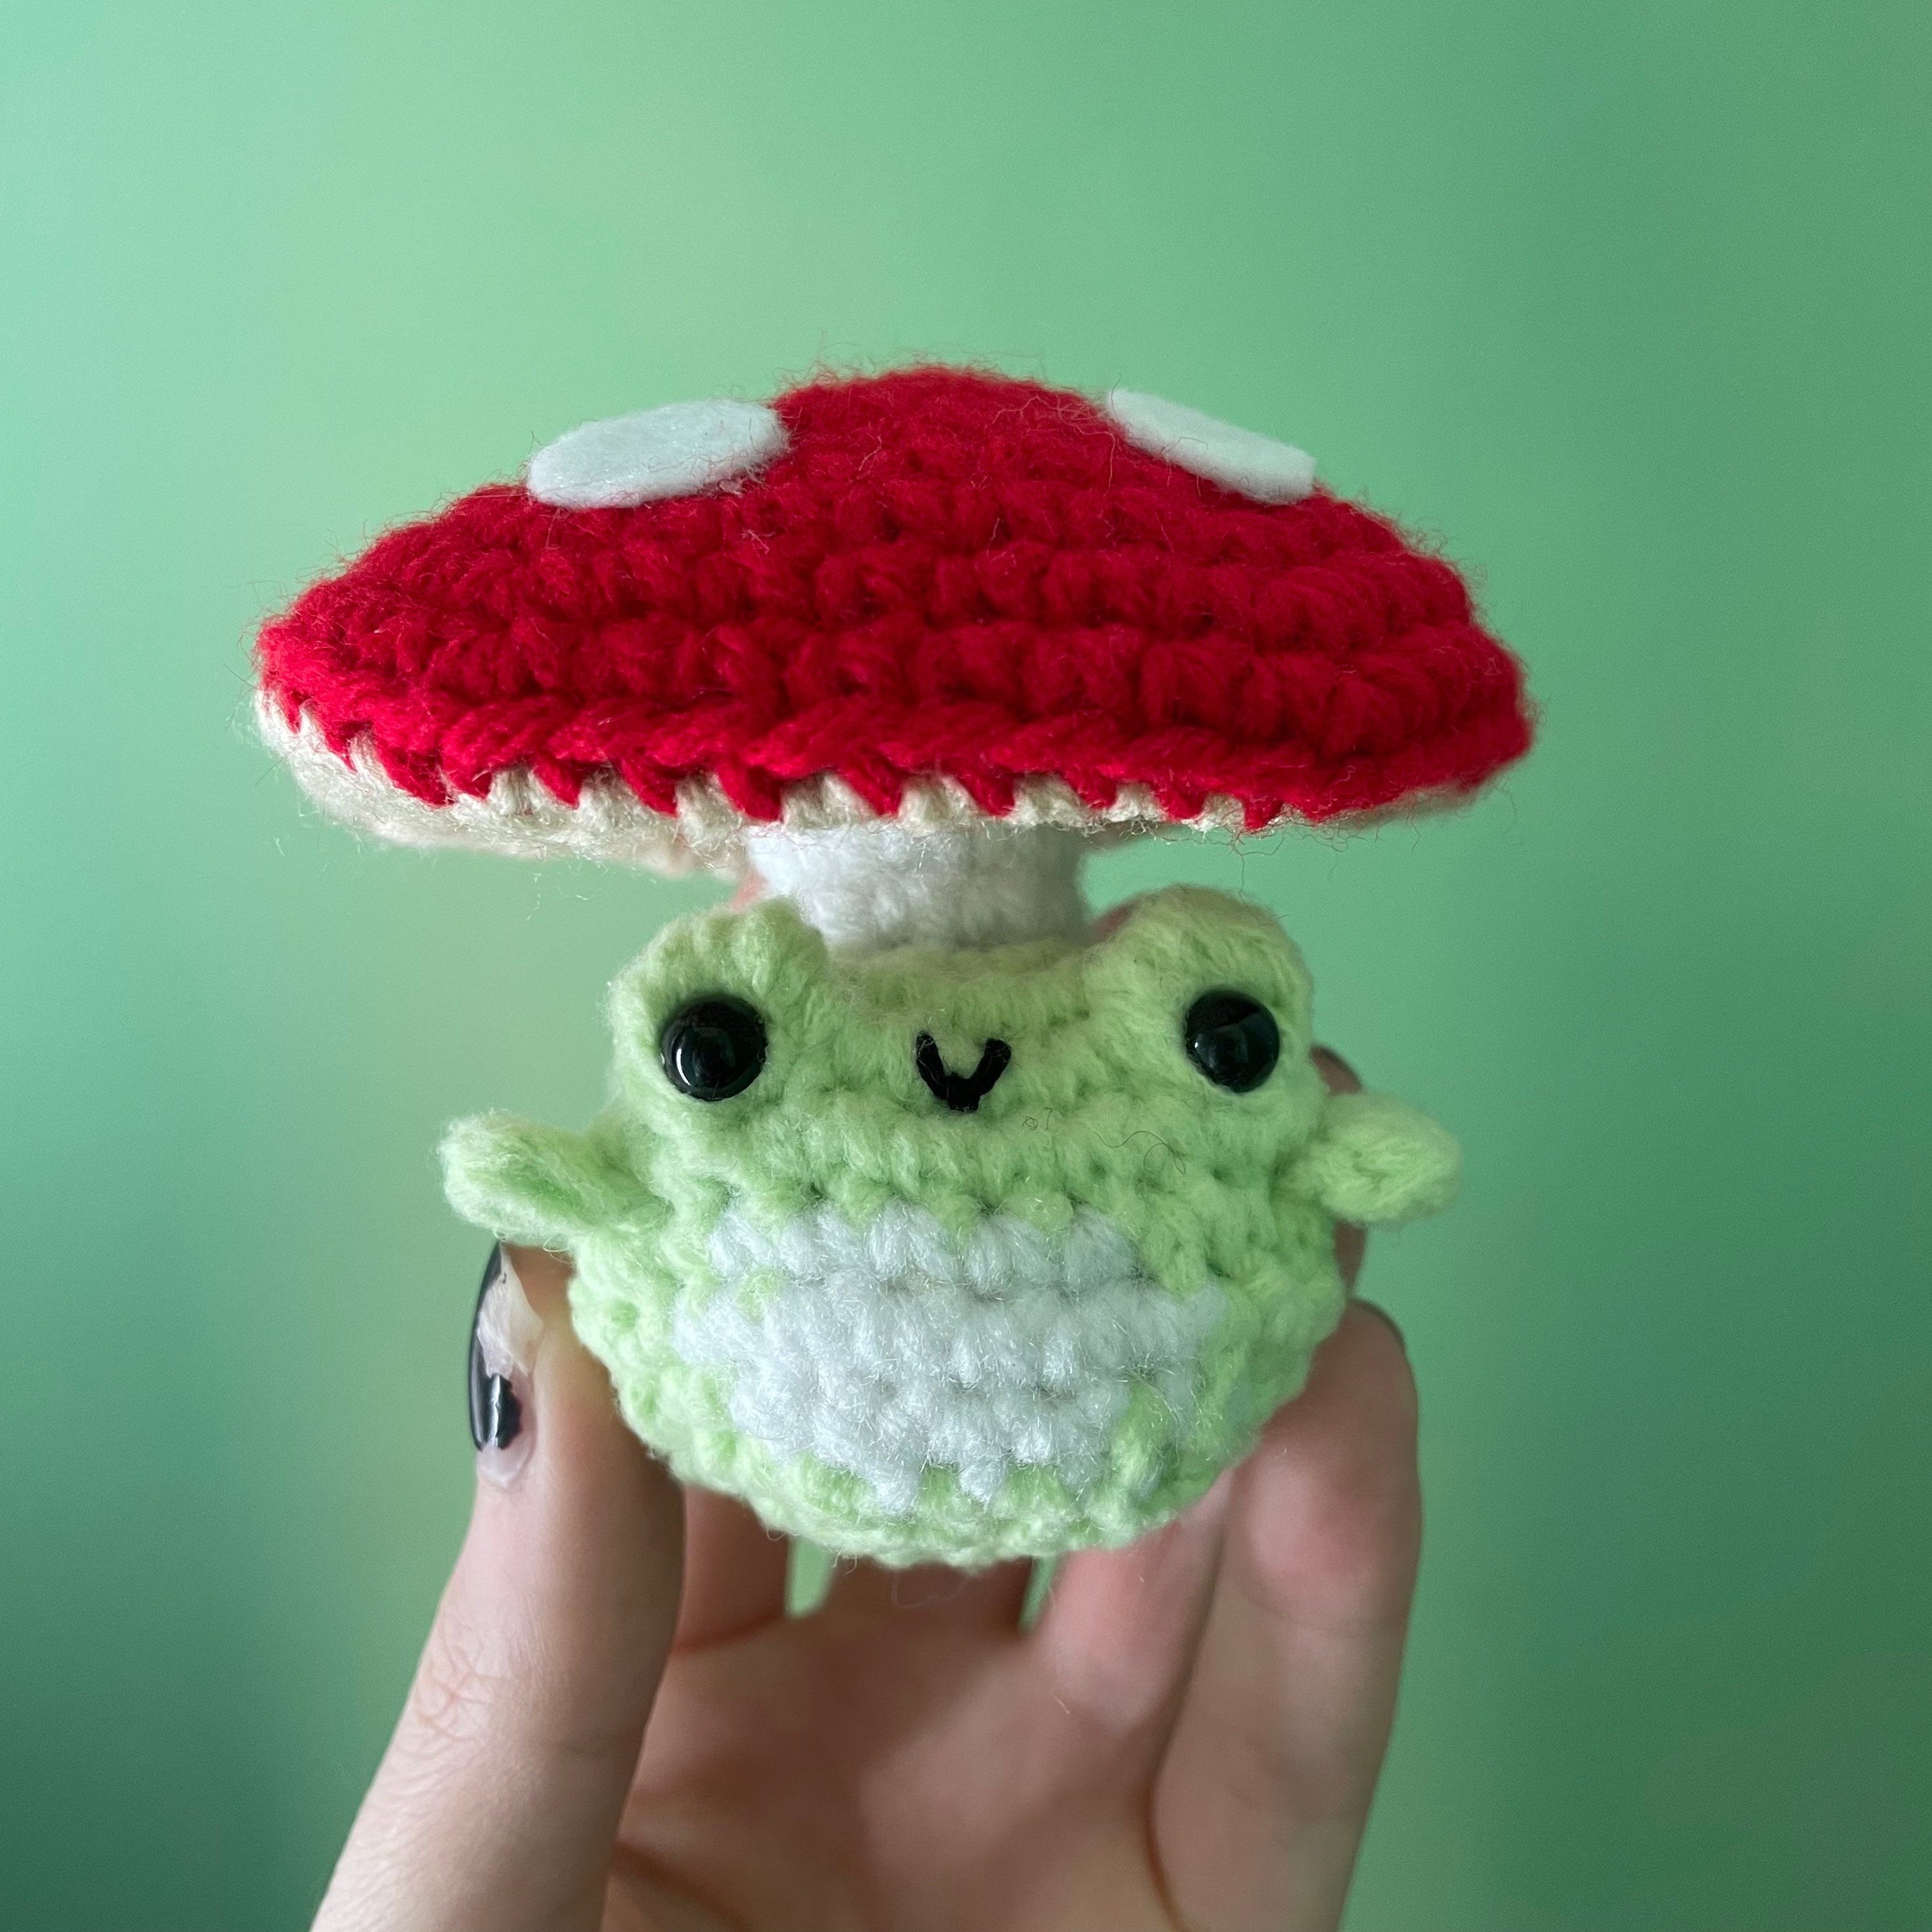  Cute Frog Plush Doll with Red Mushroom Hat Stuffed